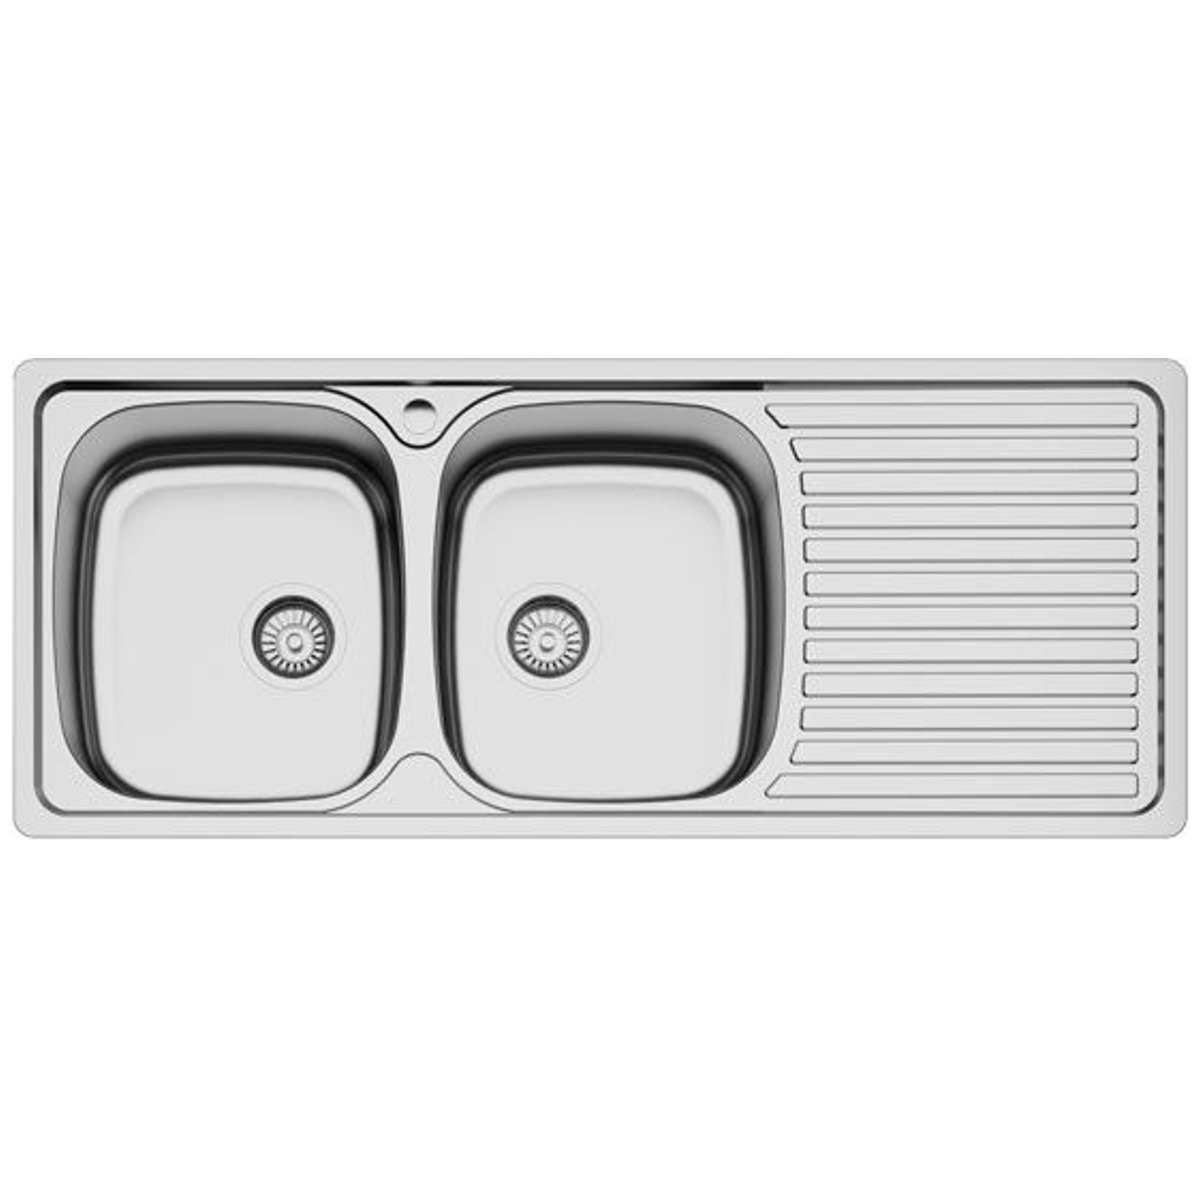 2 Bowl Stainless Steel Kitchen Sink with Drainer 116×50 Karag BL 933B